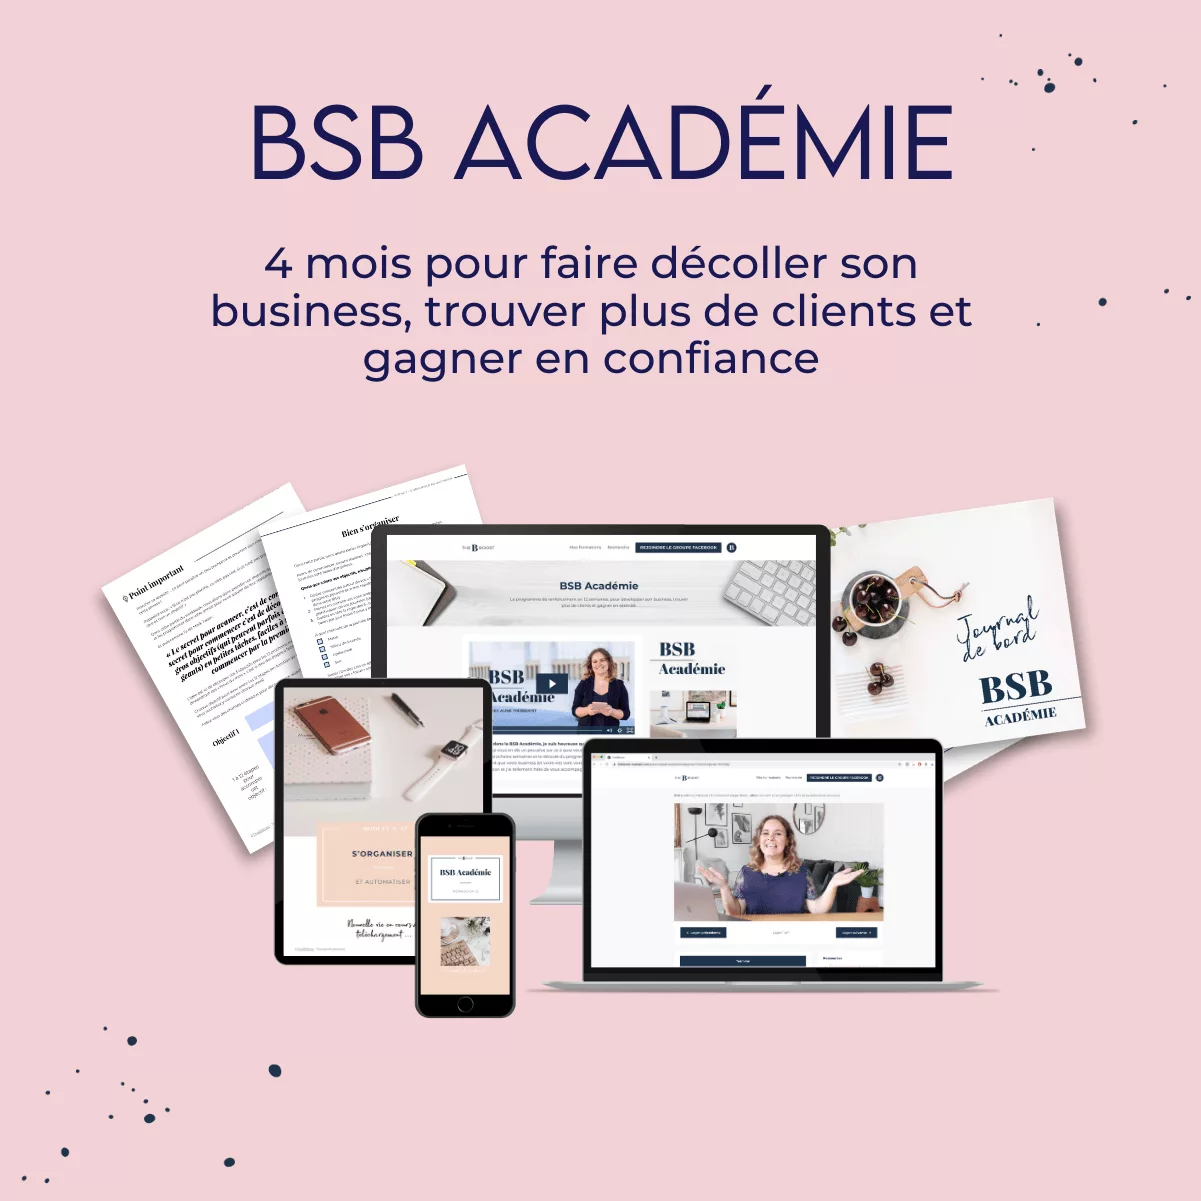 BSB Académie